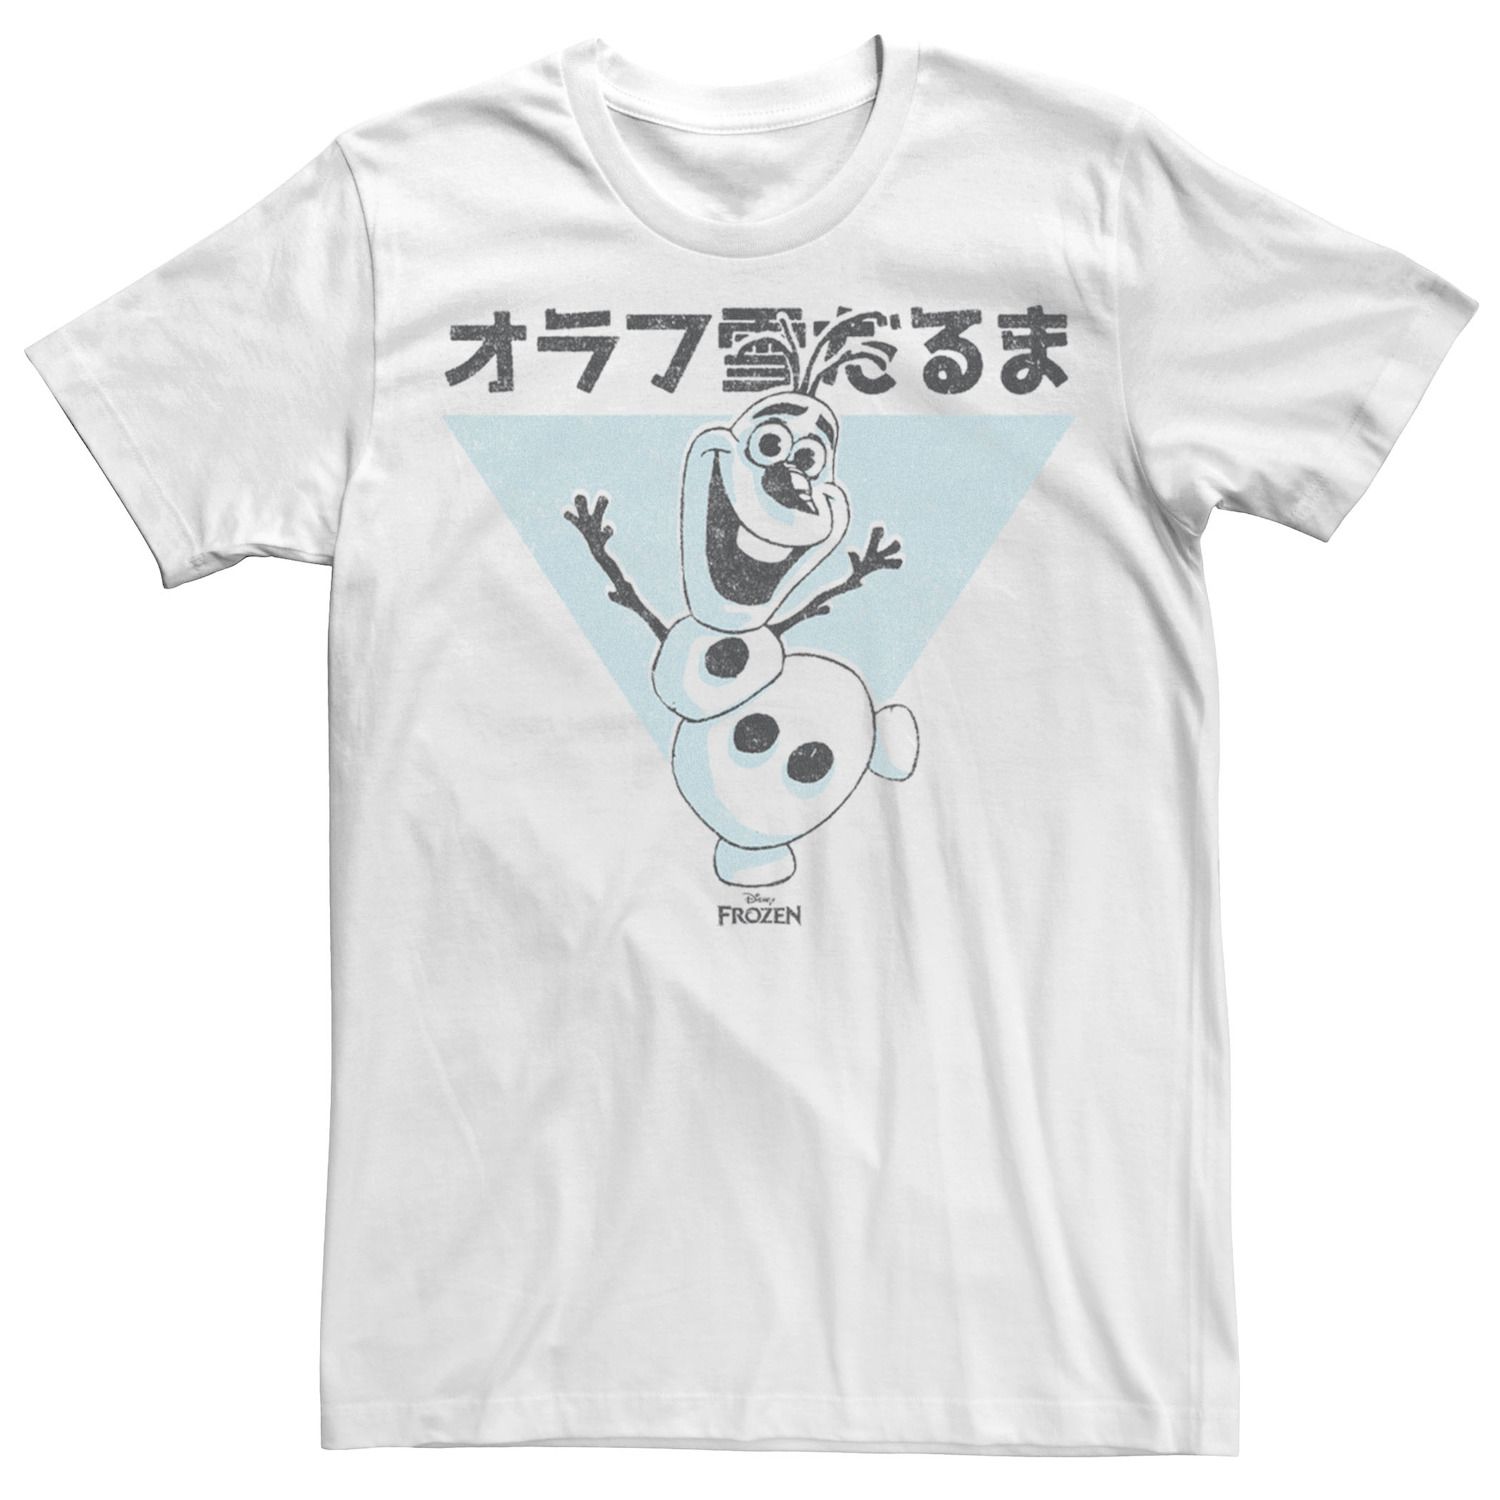 Мужская футболка 's Frozen с изображением кандзи Олафа и снеговика Disney